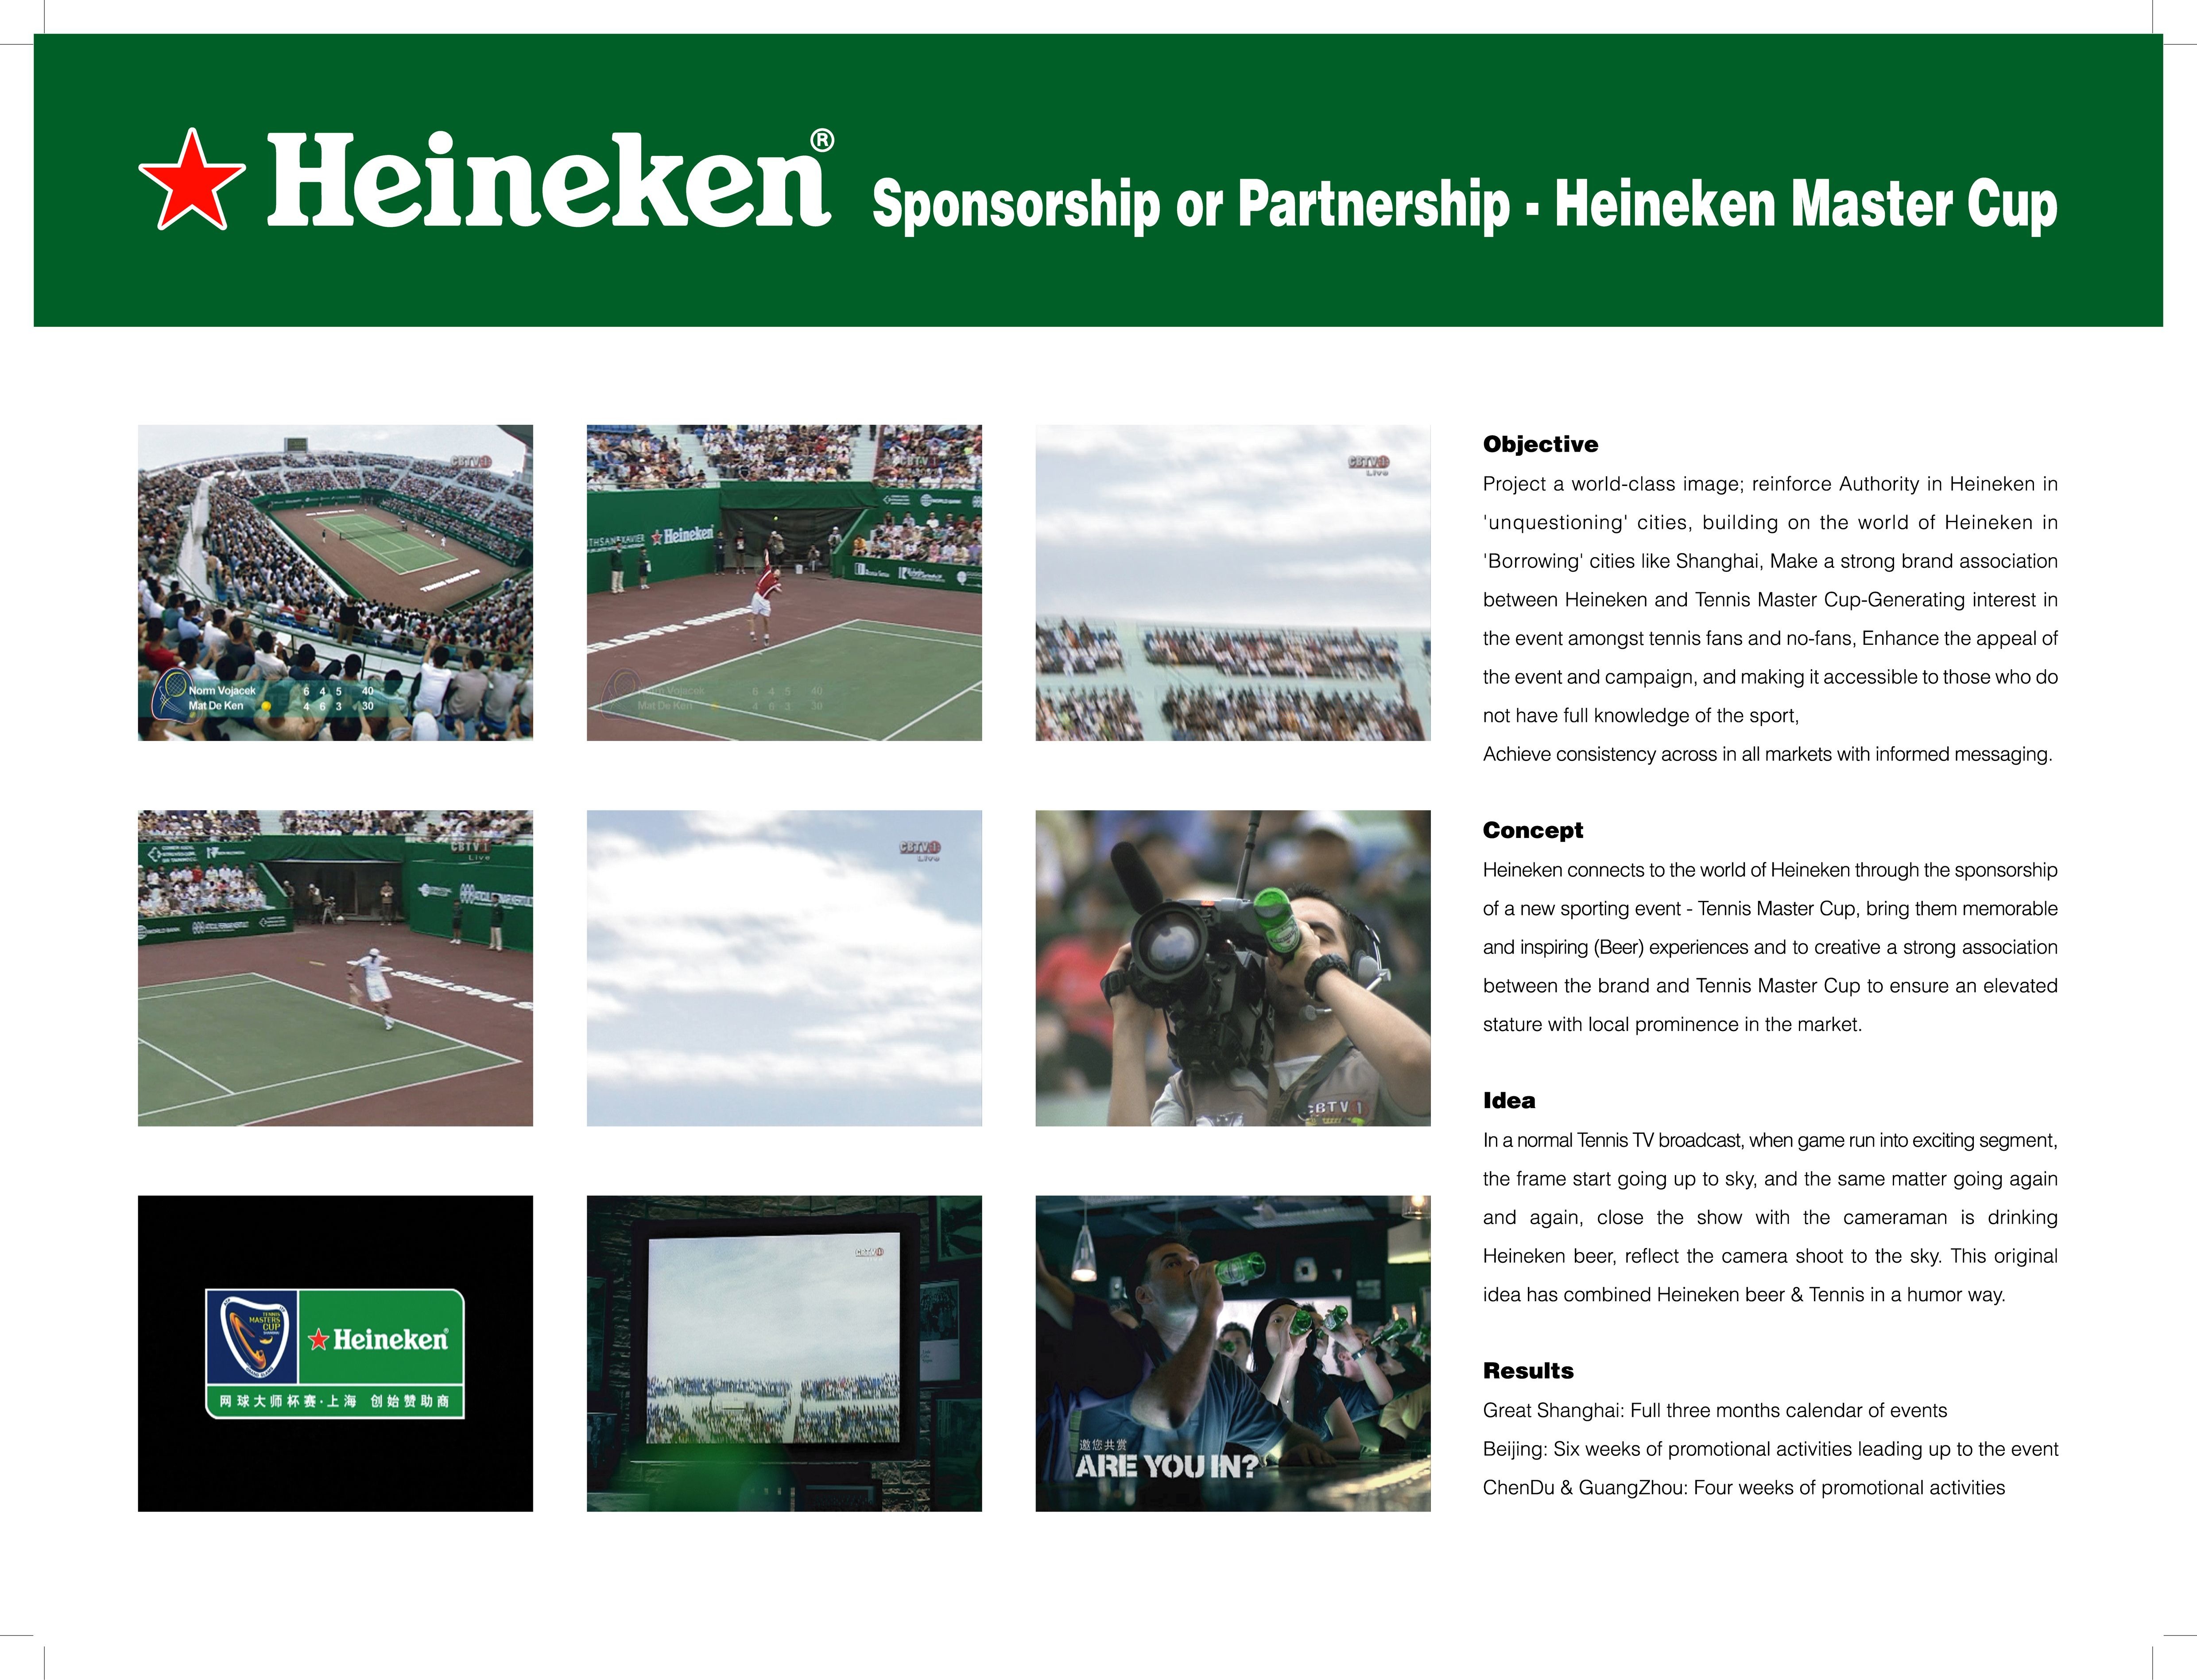 HEINEKEN/TENNIS MASTER CUP